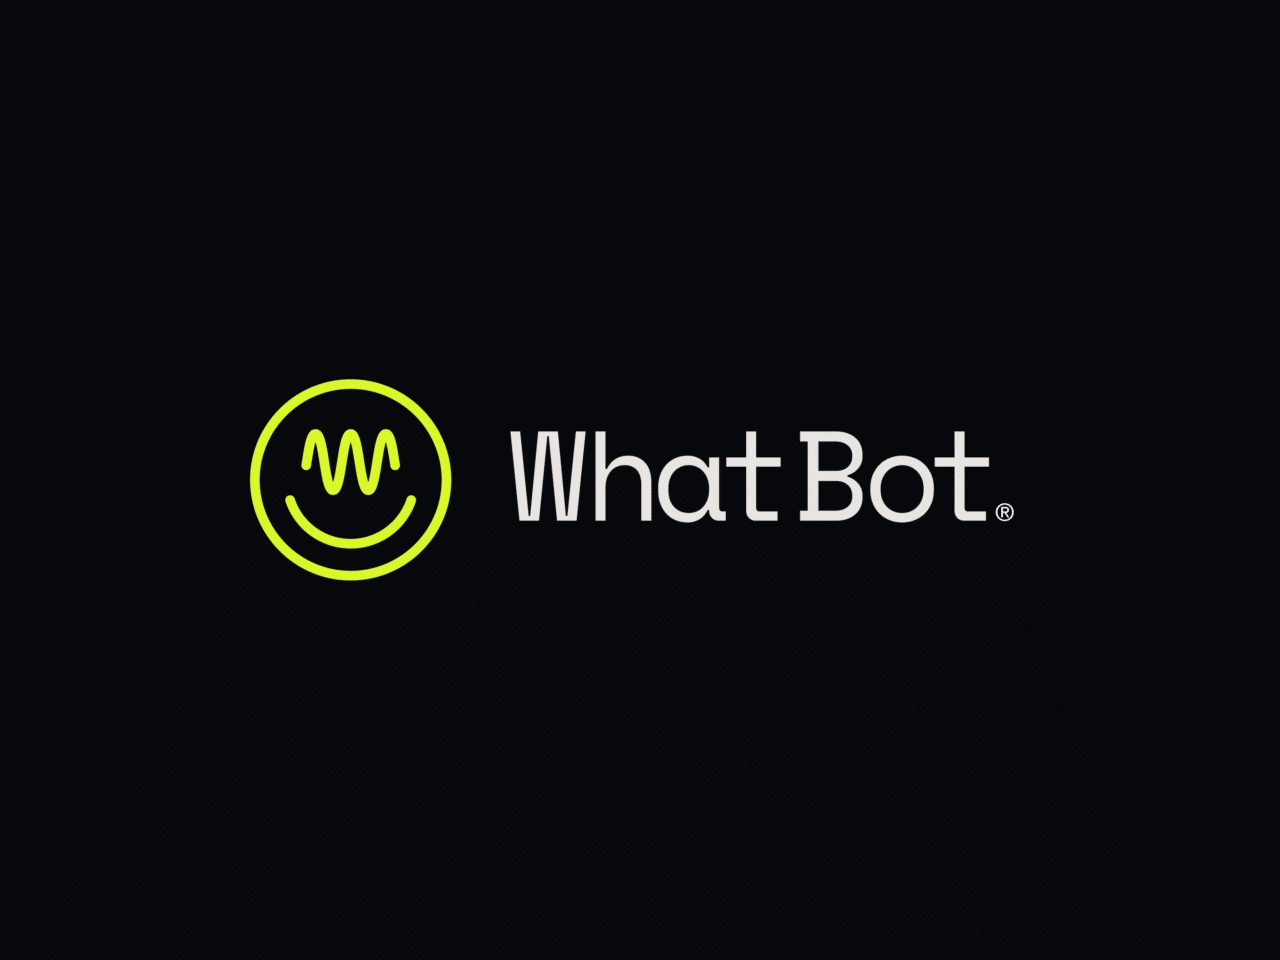 Whatbot